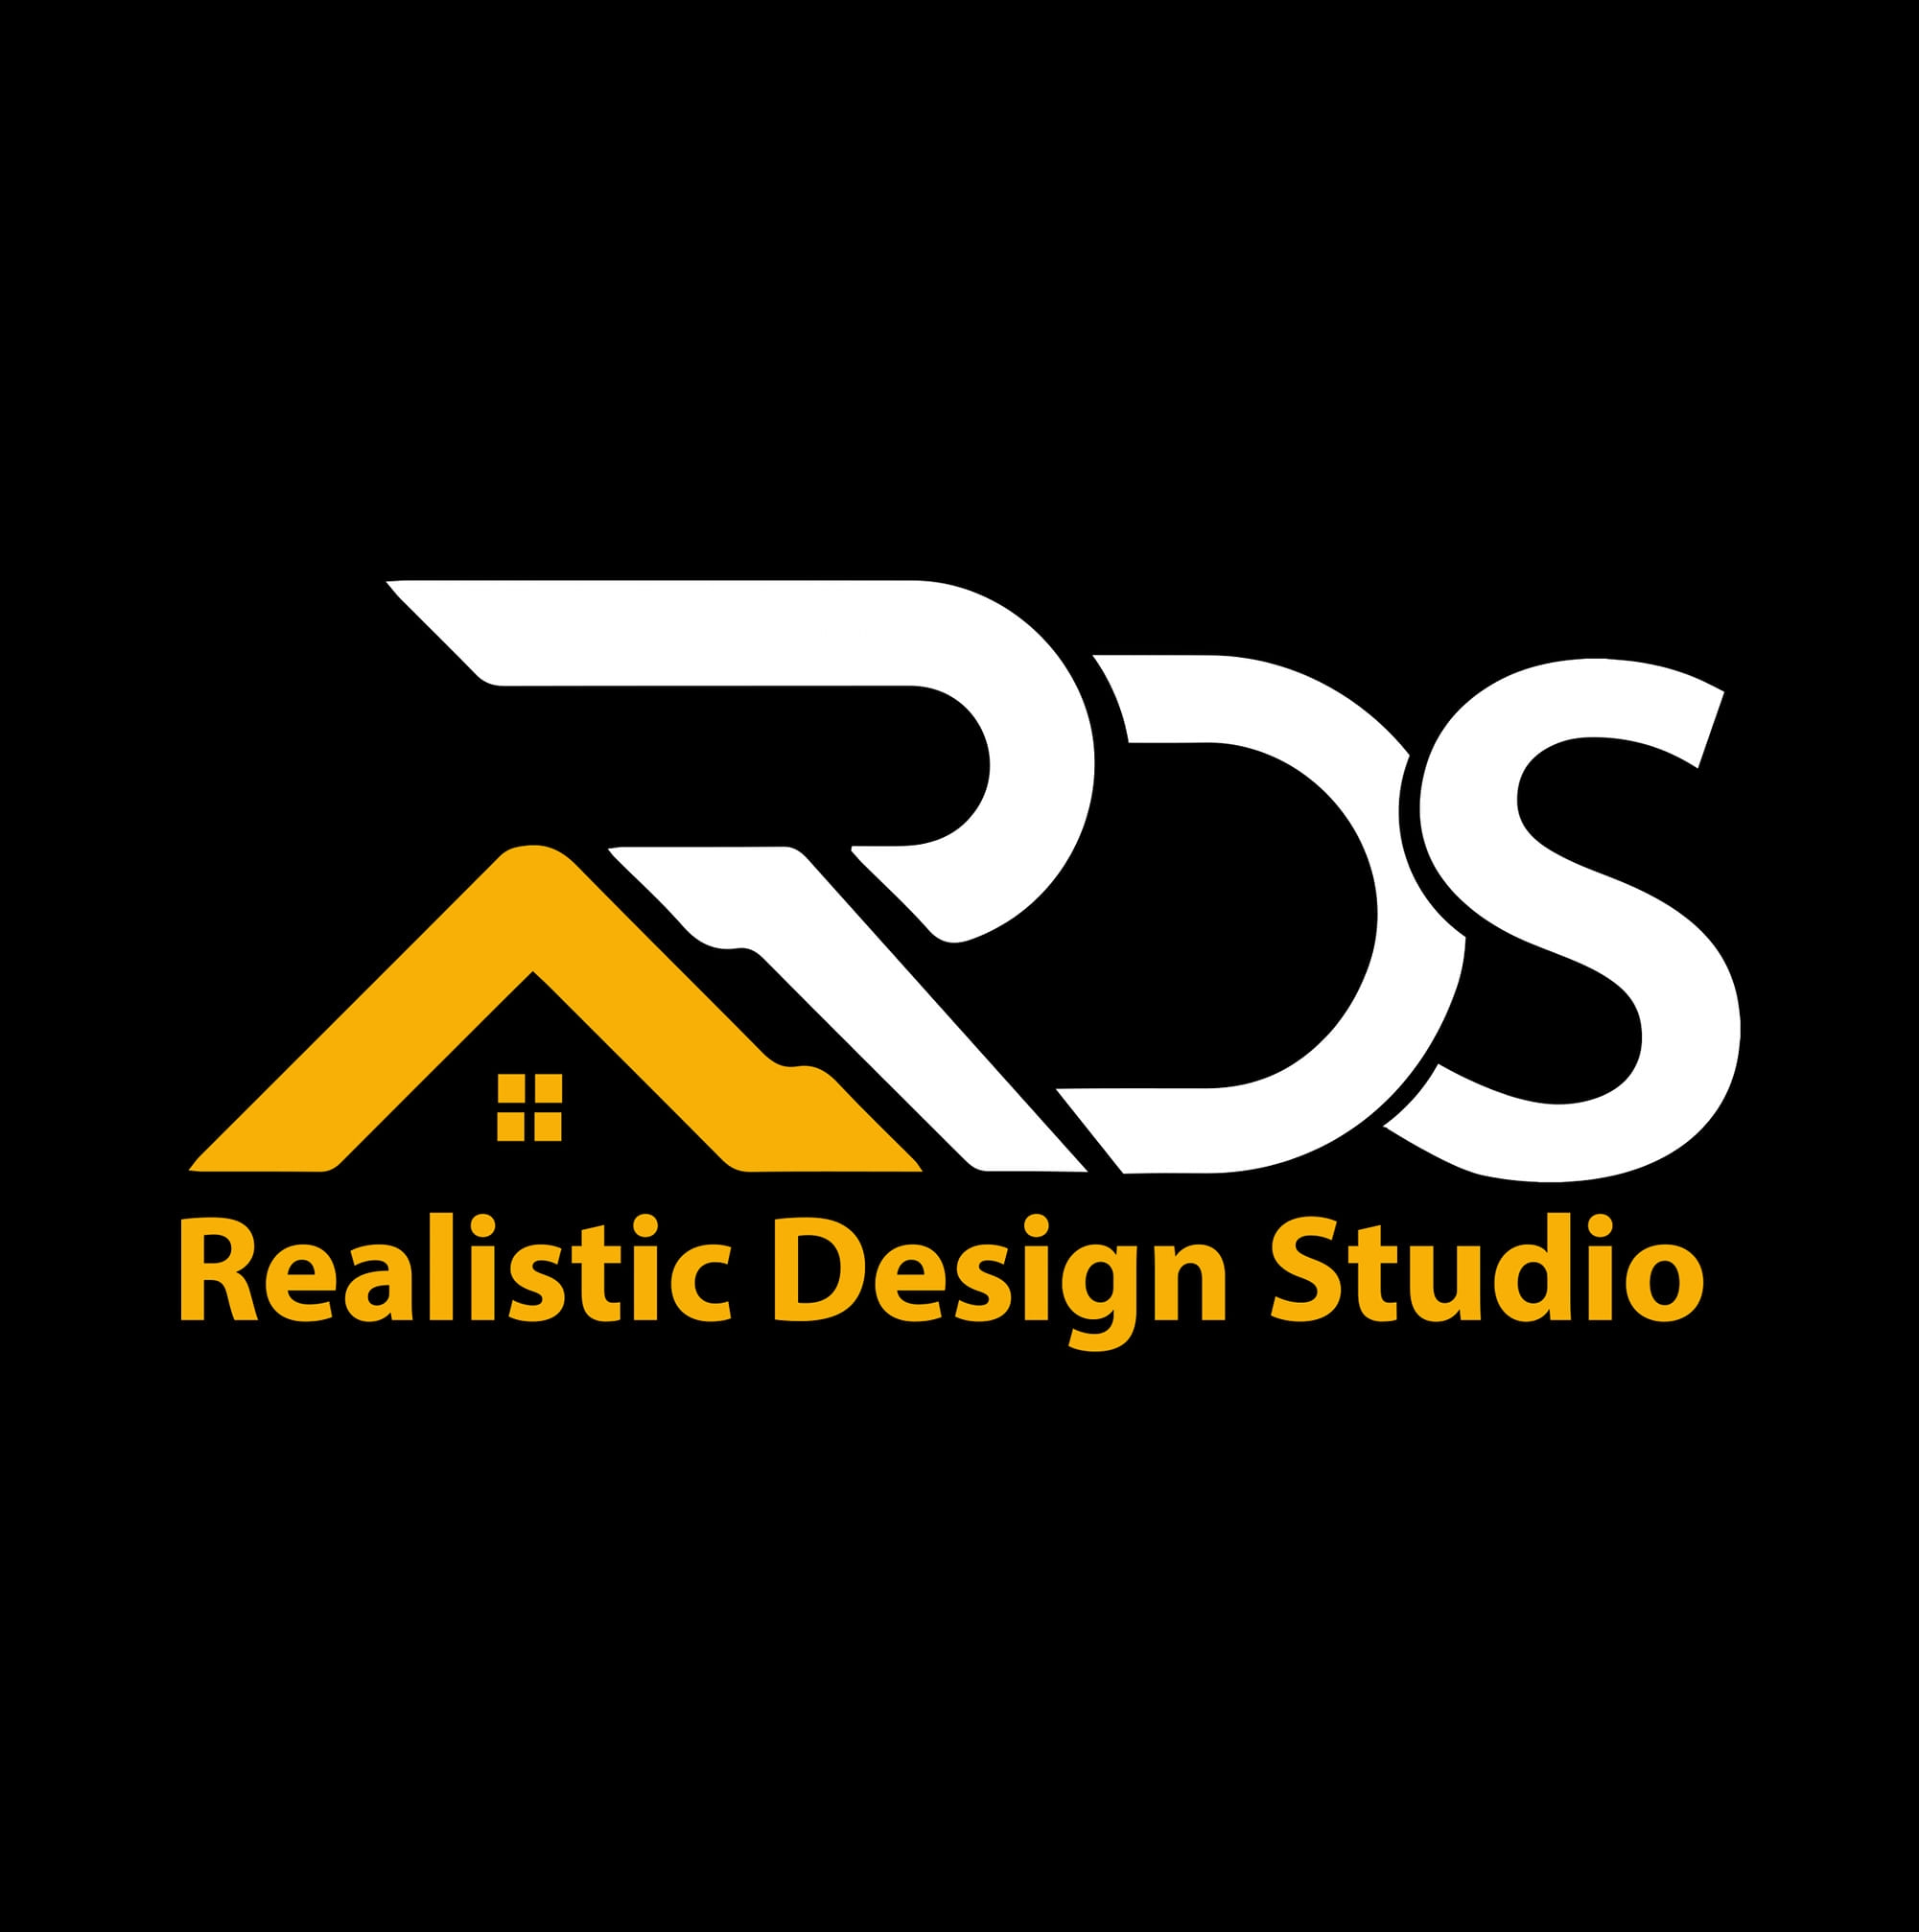 Realistic Design Studio|Legal Services|Professional Services